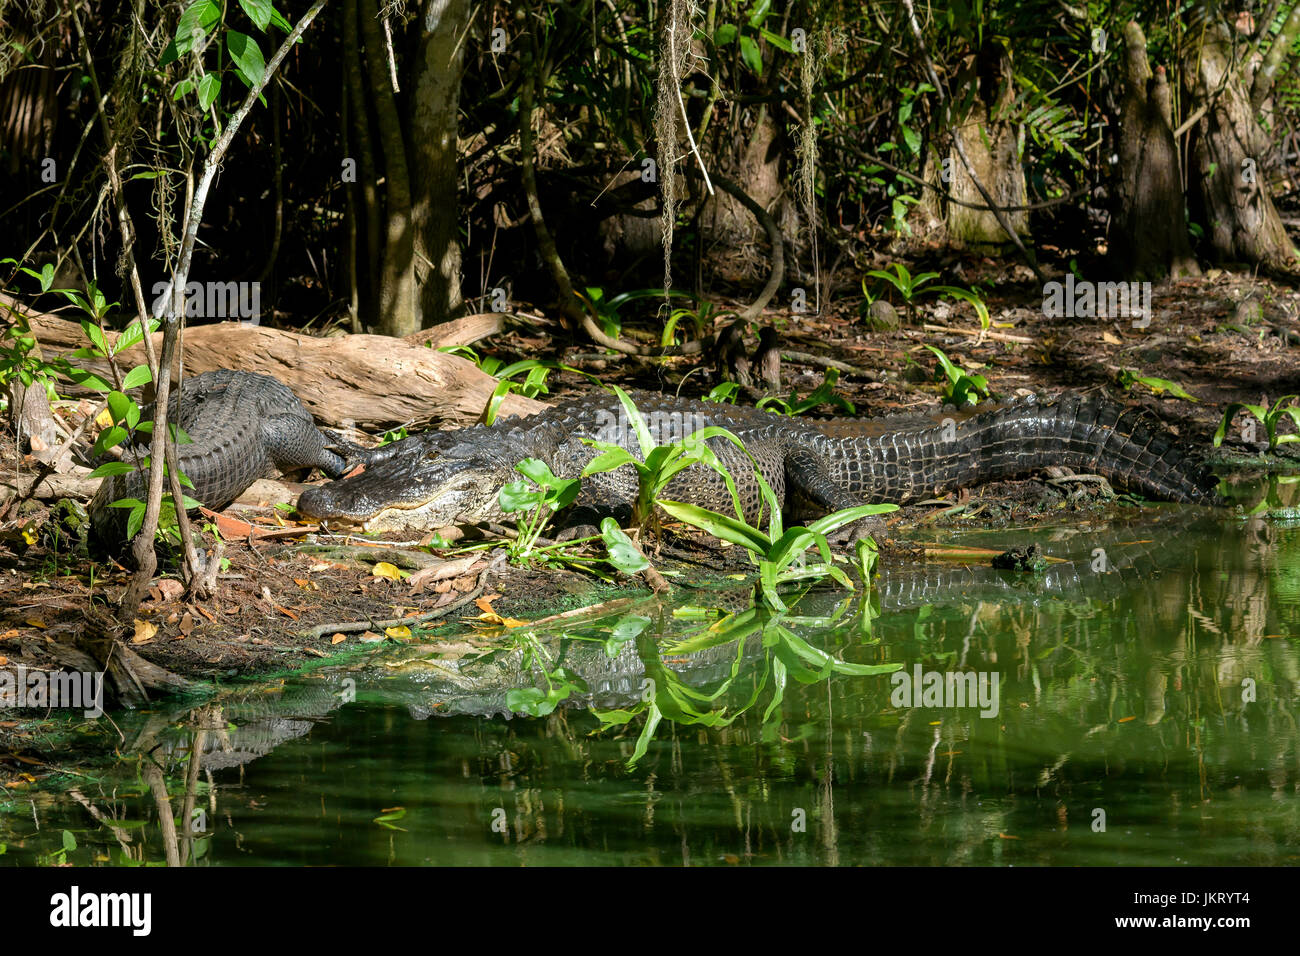 American alligators (Alligator mississippiensis) basking, Big Cypress Bend, Fakahatchee Strand, Florida, USA Stock Photo